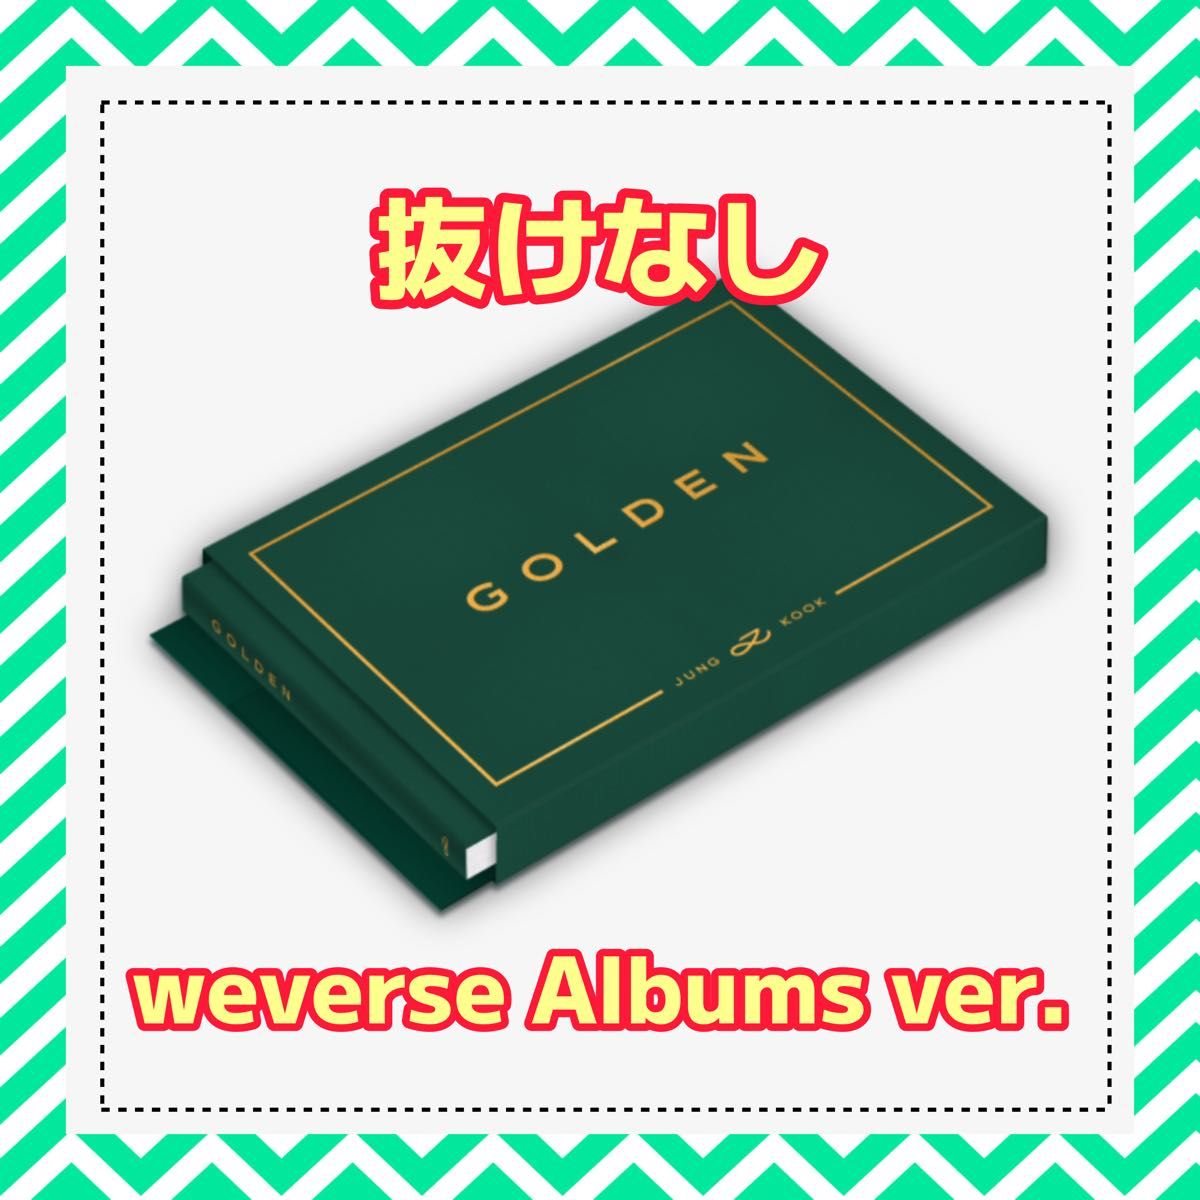 GOLDEN JUNGKOOK weverse Albums.ver②